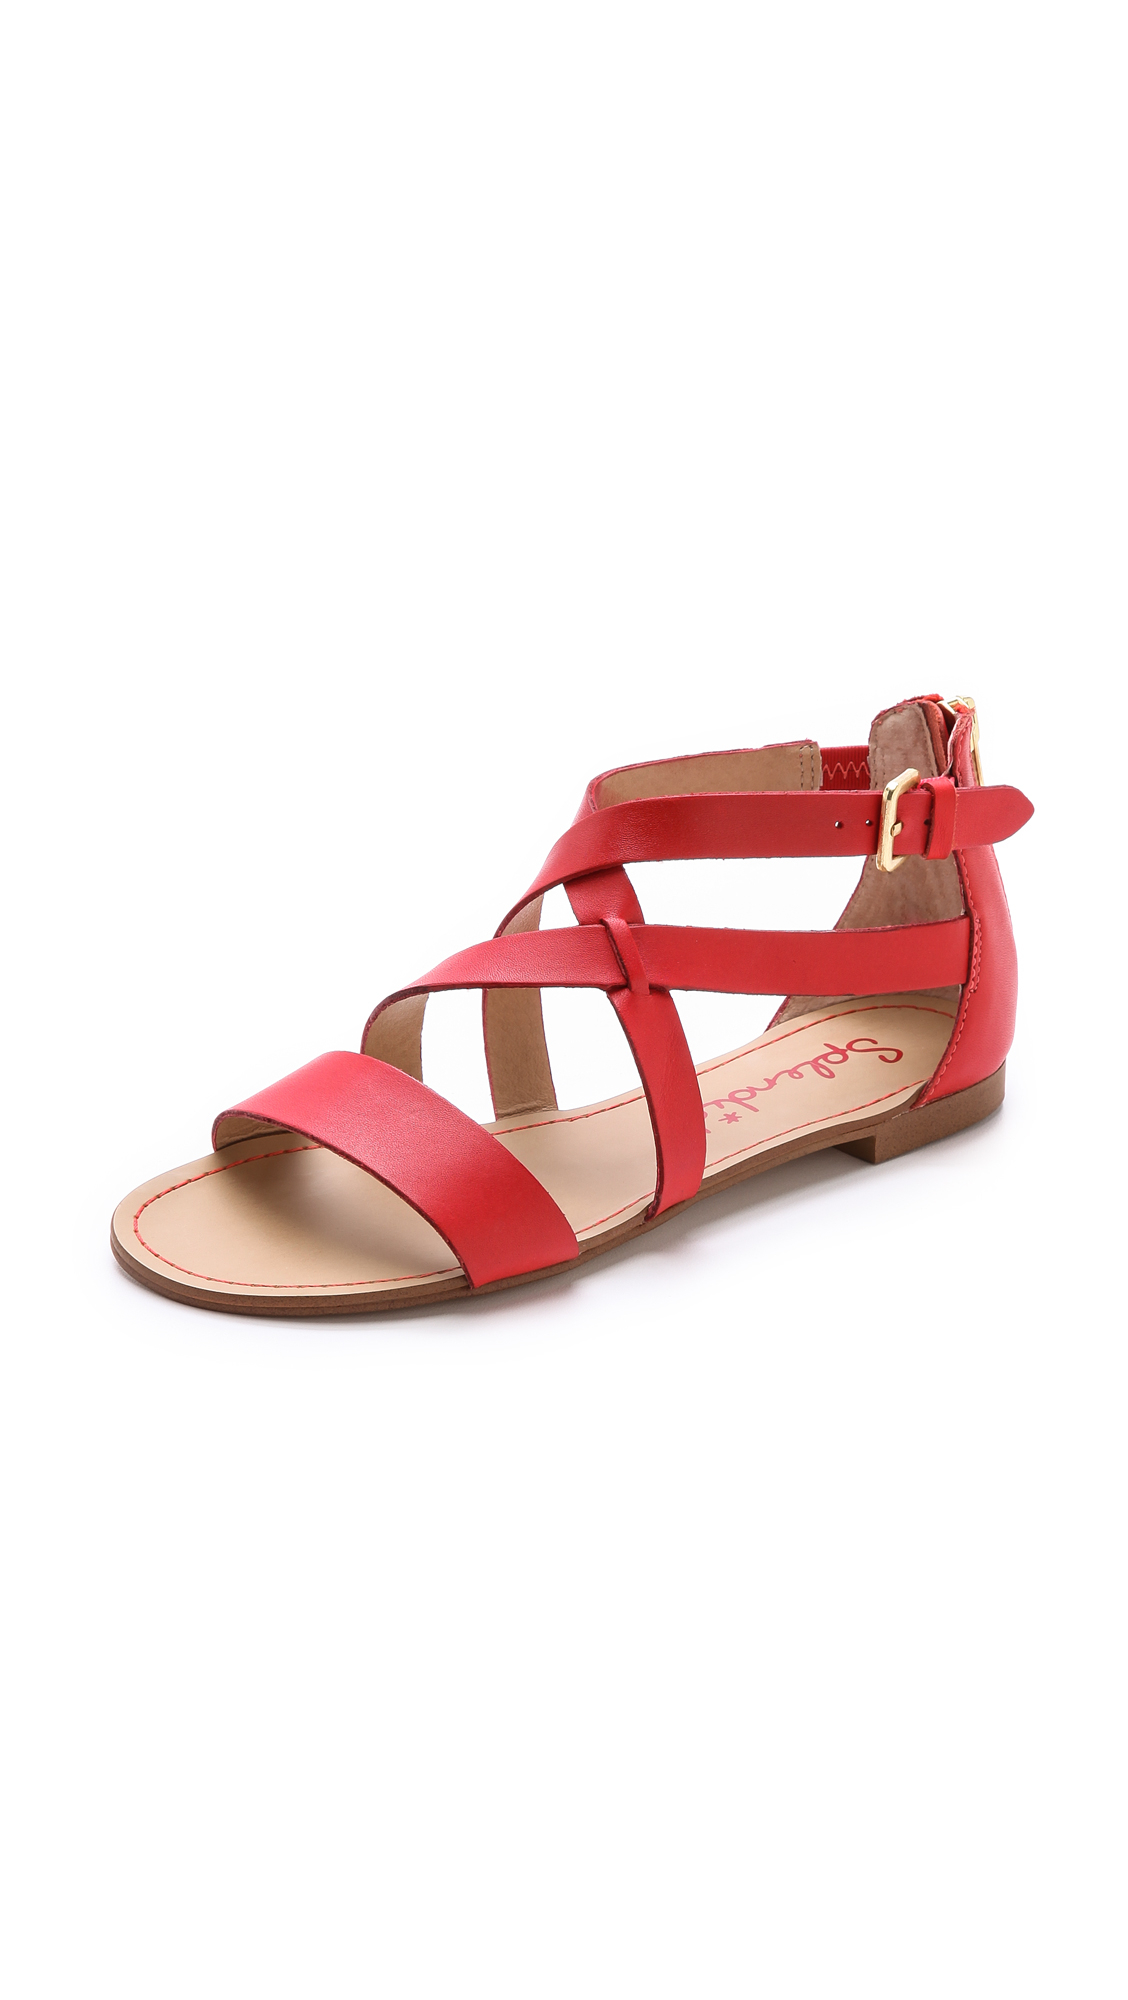 Splendid Cantina Flat Sandals in Red - Lyst